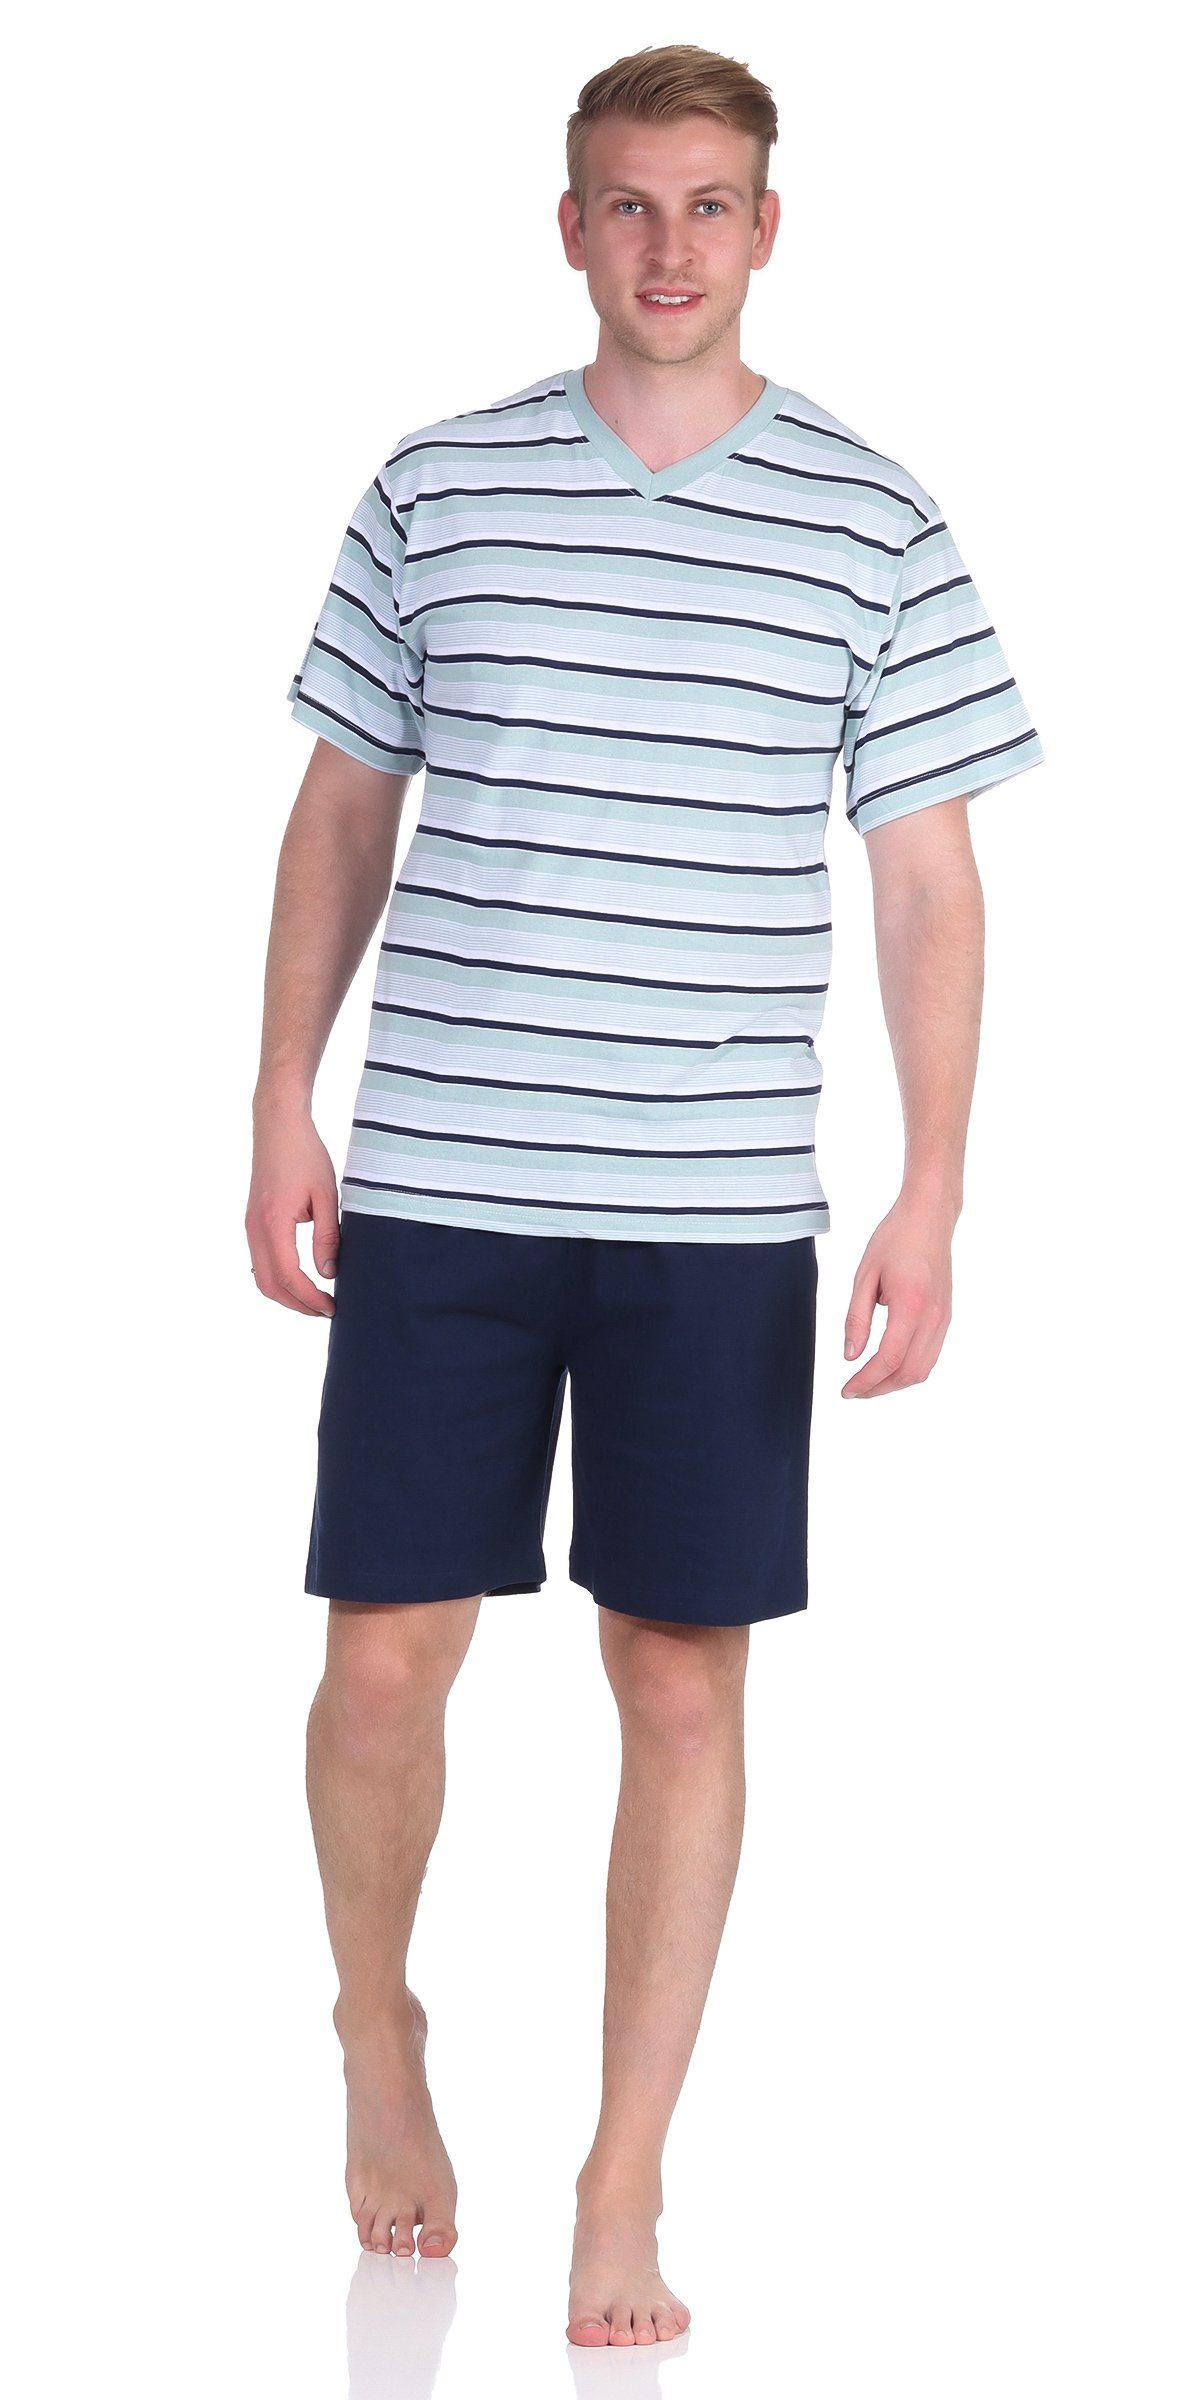 Shorty Moonline Aqua Kurzarm Baumwolle Shorty 100% Single-Jersey Schlafanzug mit Herren V-Ausschnitt